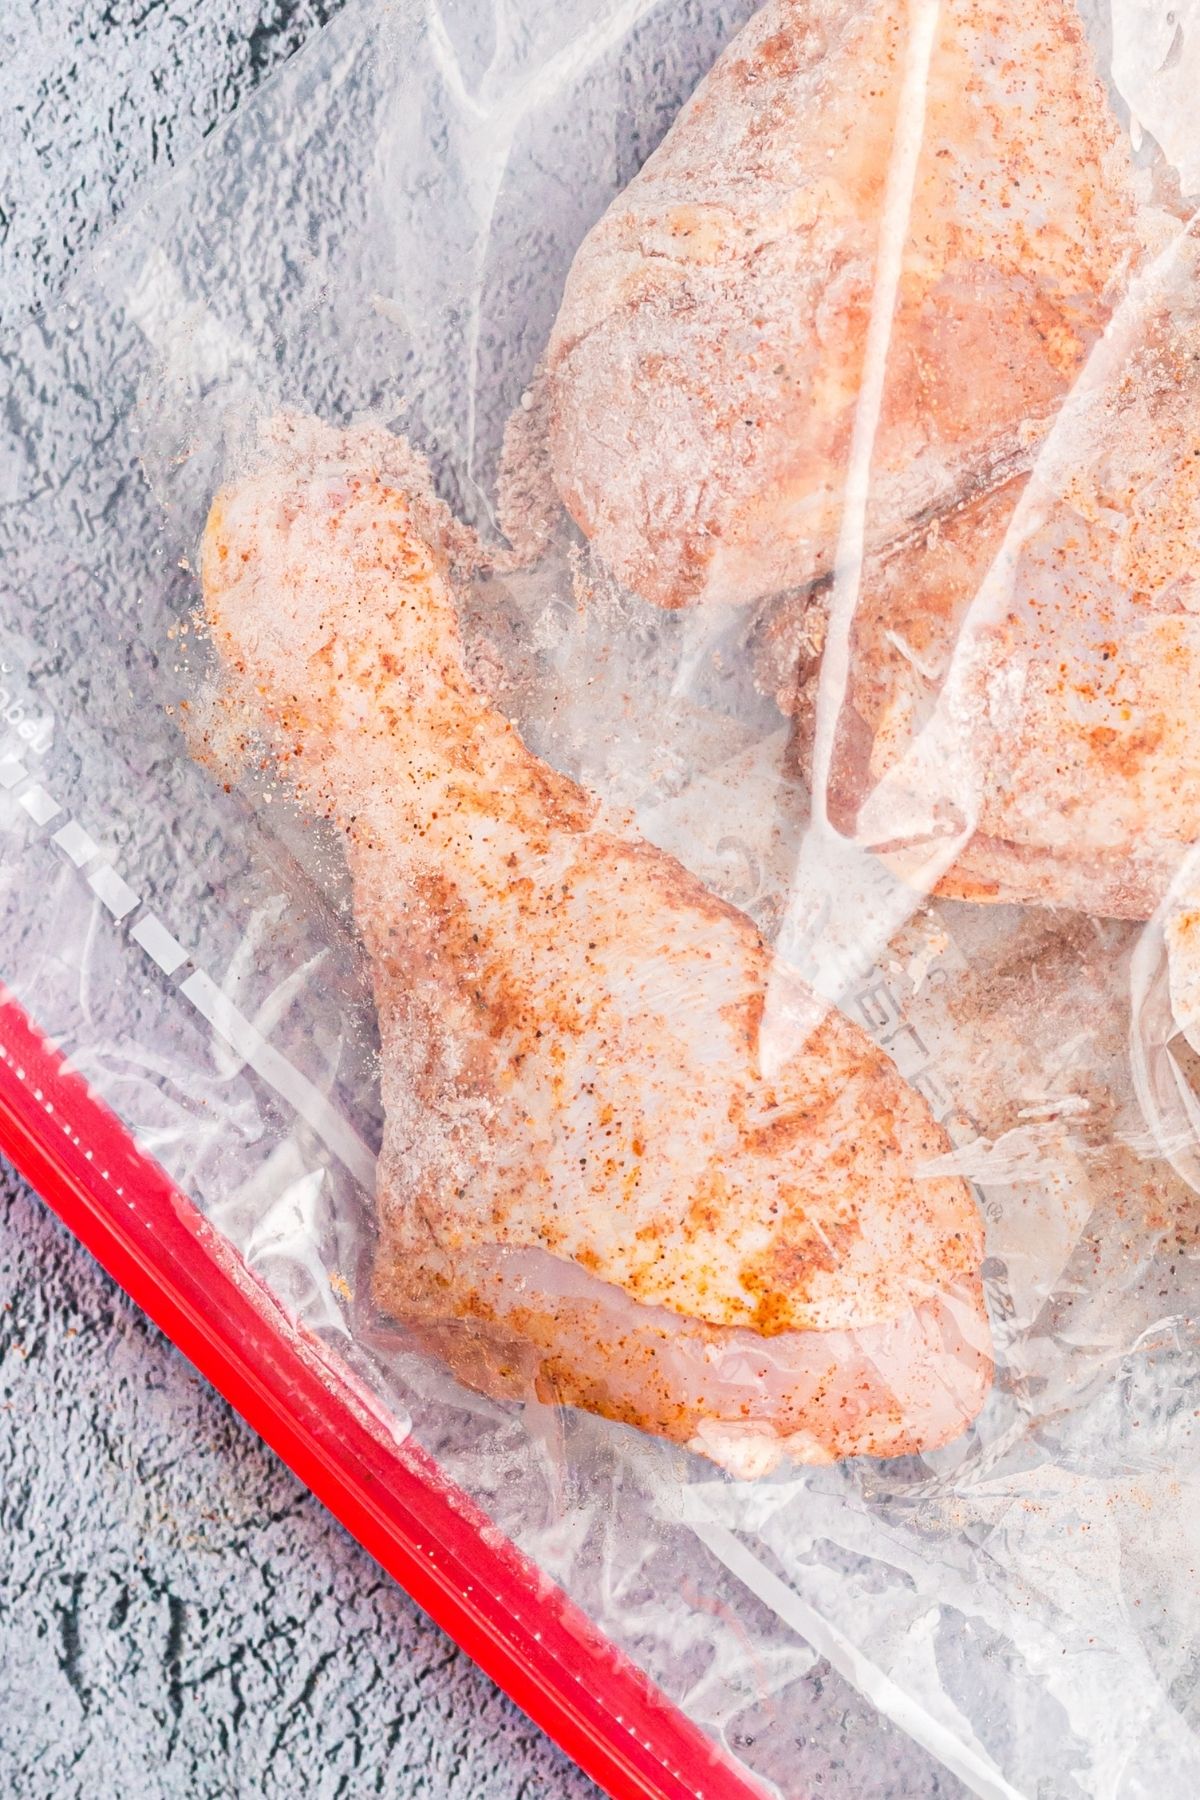 Close up photo showing drumstick in a ziploc bag, shaken with seasonings.